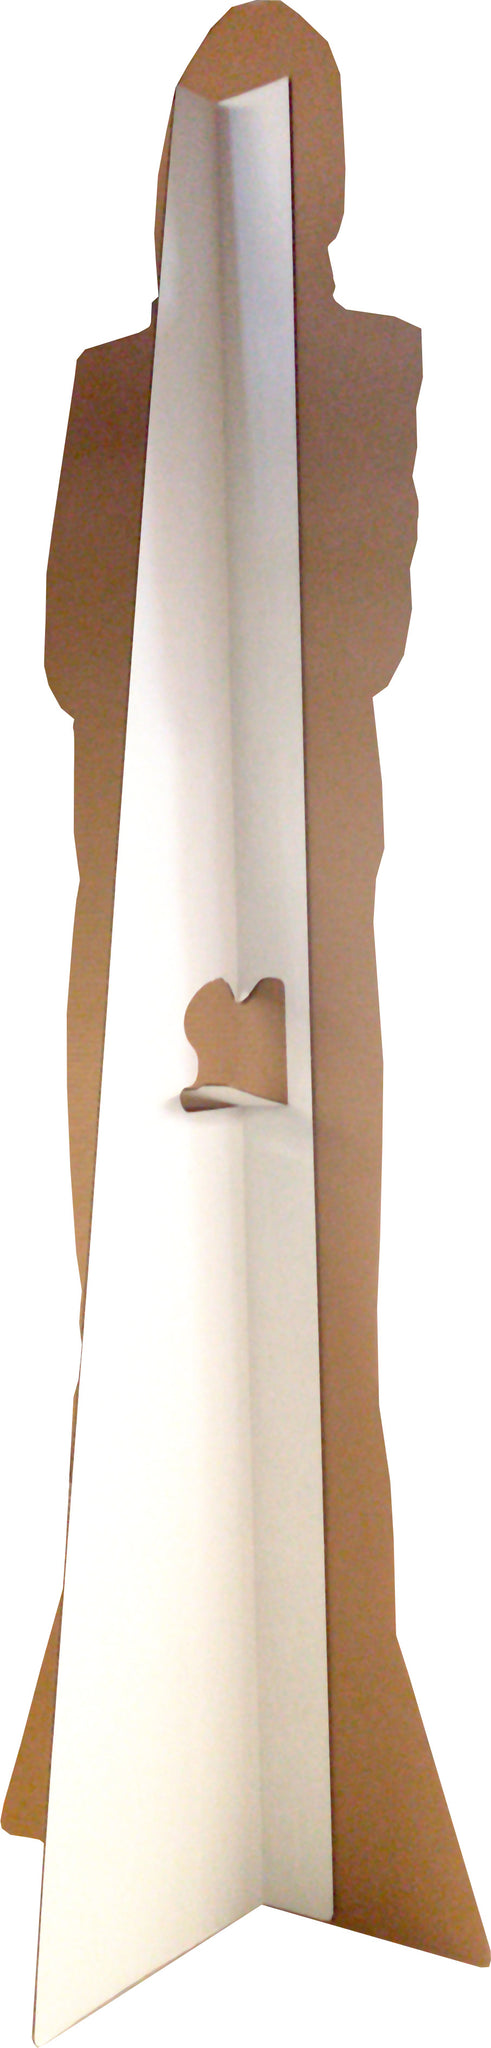 LIONEL RICHIE - 71 TALL - LIFE SIZE CARDBOARD CUTOUT STANDEE – Standee  Store Cardboard Cutouts